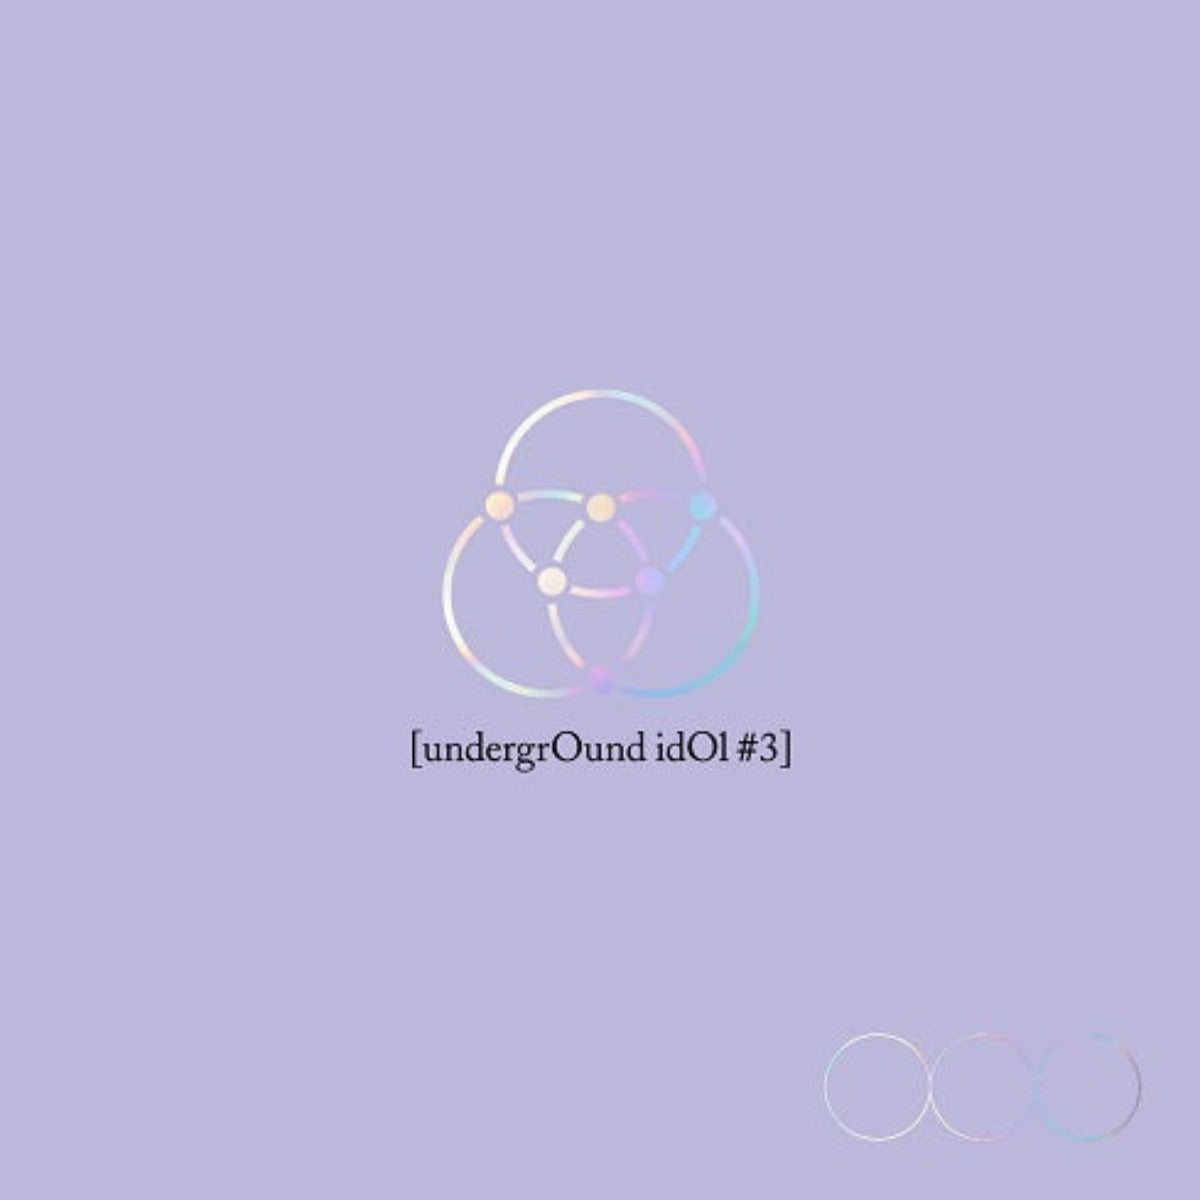 OnlyOneOf: Jun Ji Single Album Vol. 1 - undergrOund idOl #3